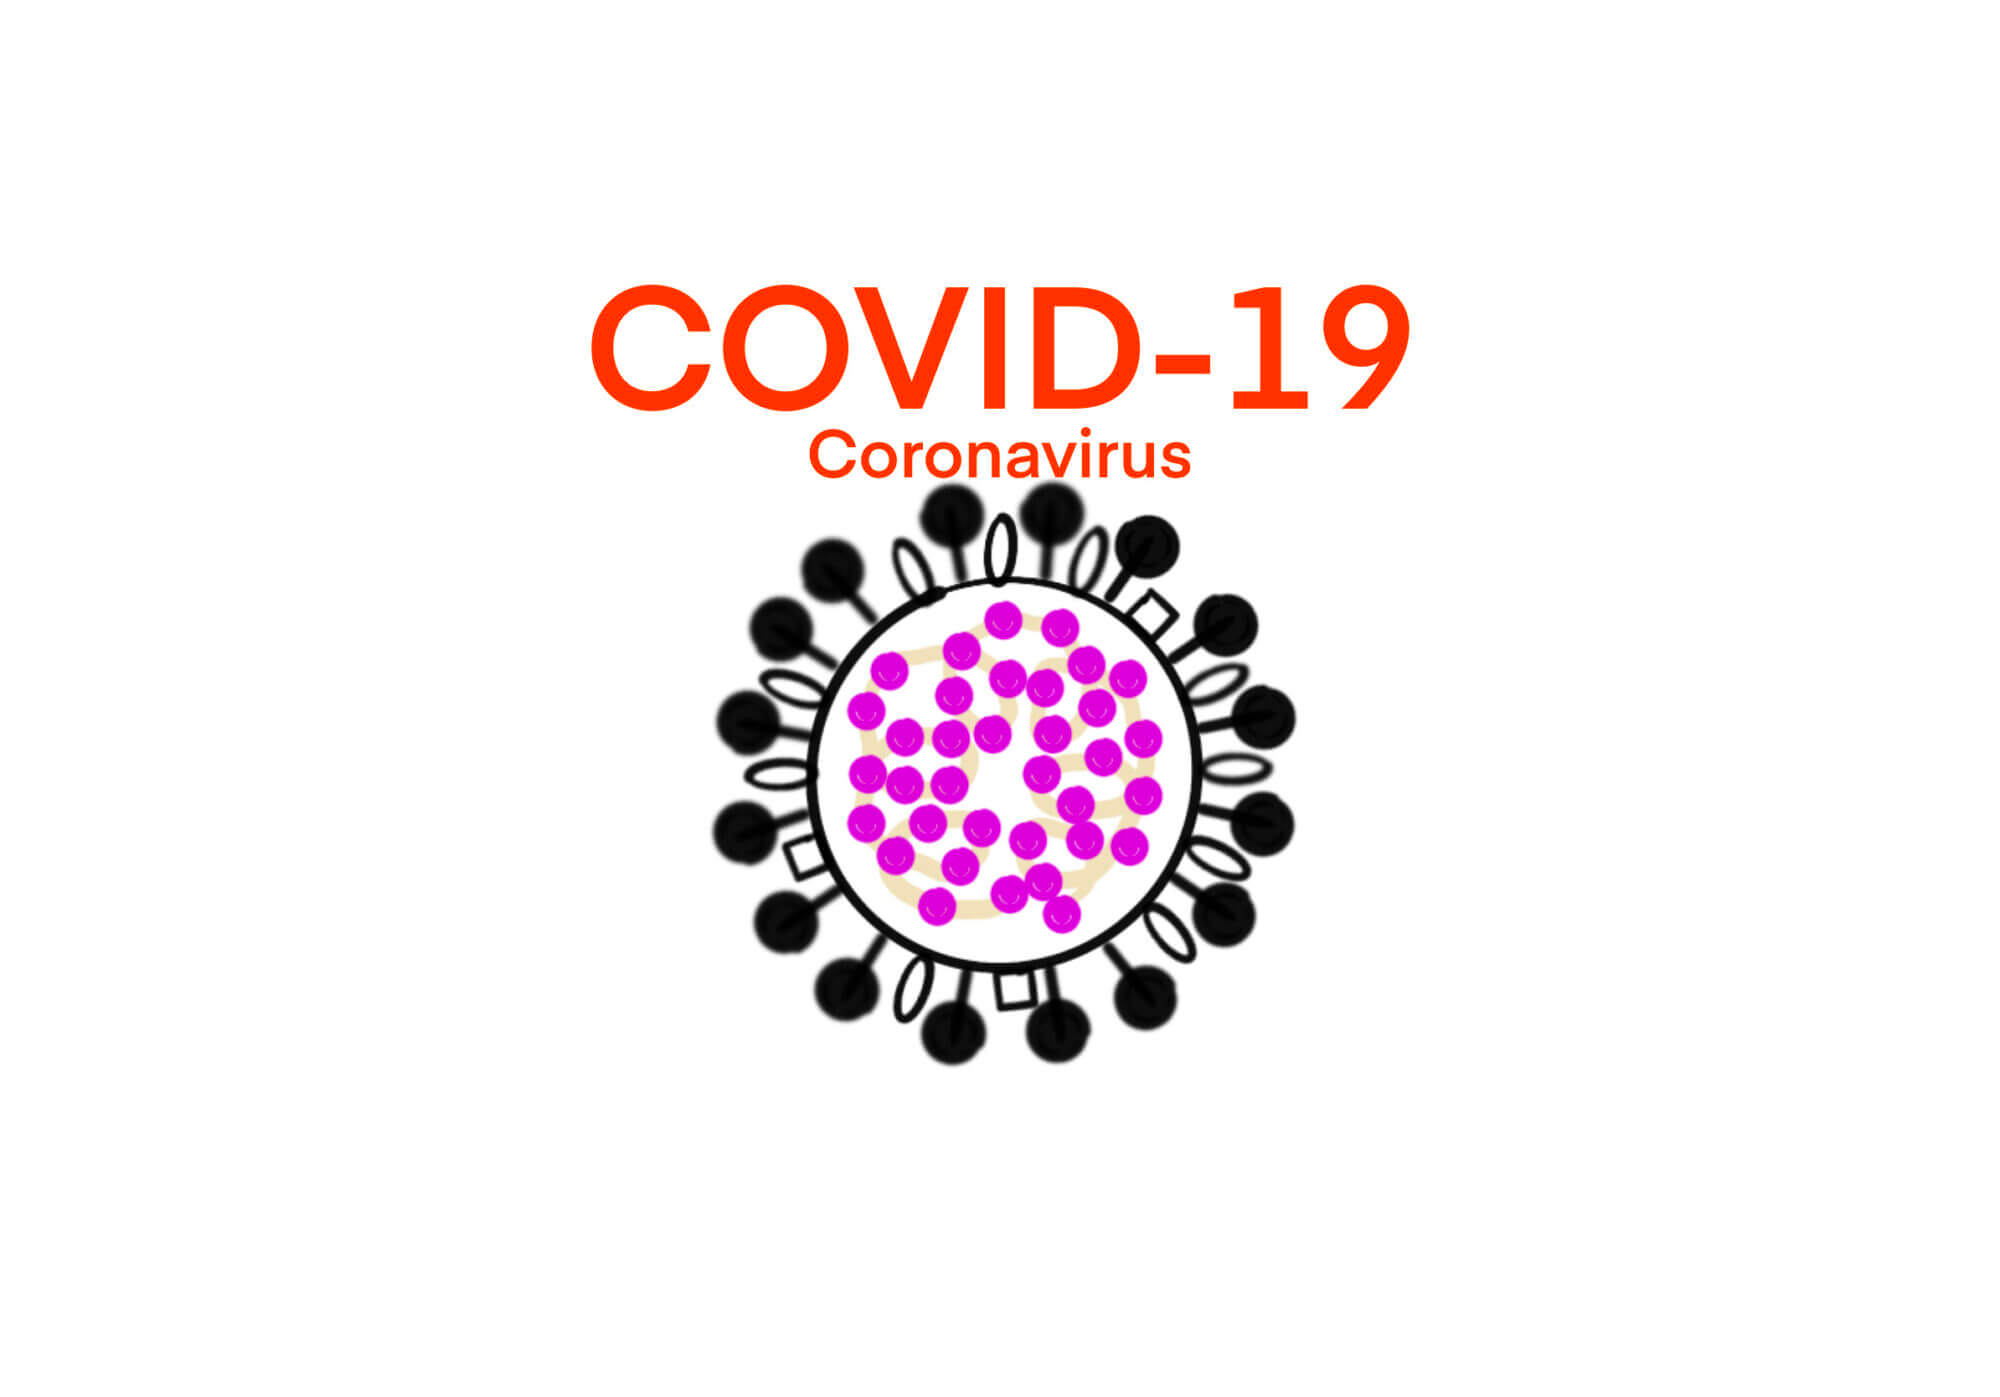 [Vc] 各社が開発したCOVID-19ワクチン情報リンク – [2021/10/08] ID30915